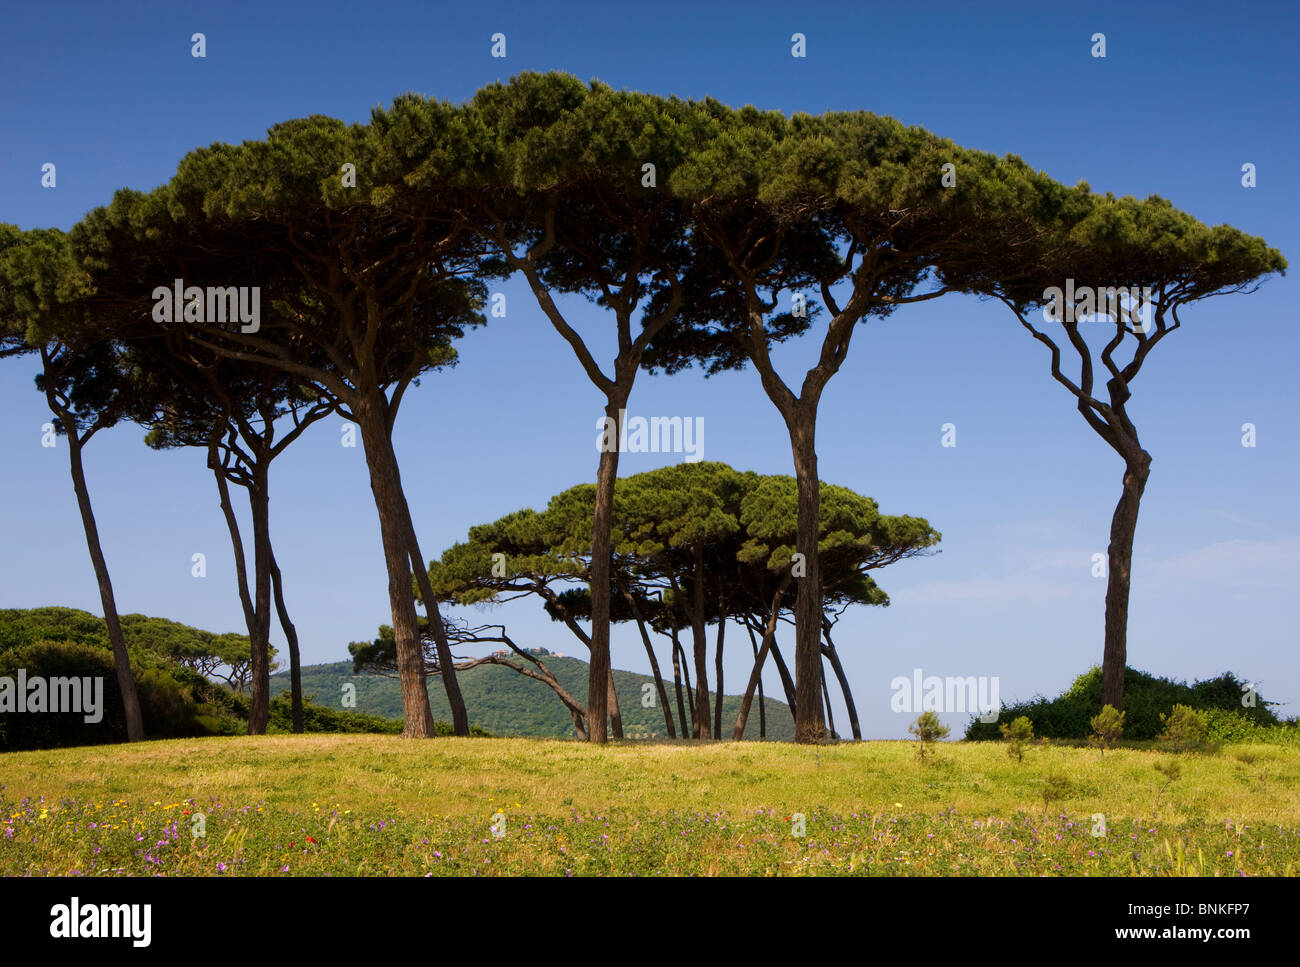 Baratti Italia Toscana golf del golfo de Baratti costa mediterránea árboles pinos Foto de stock